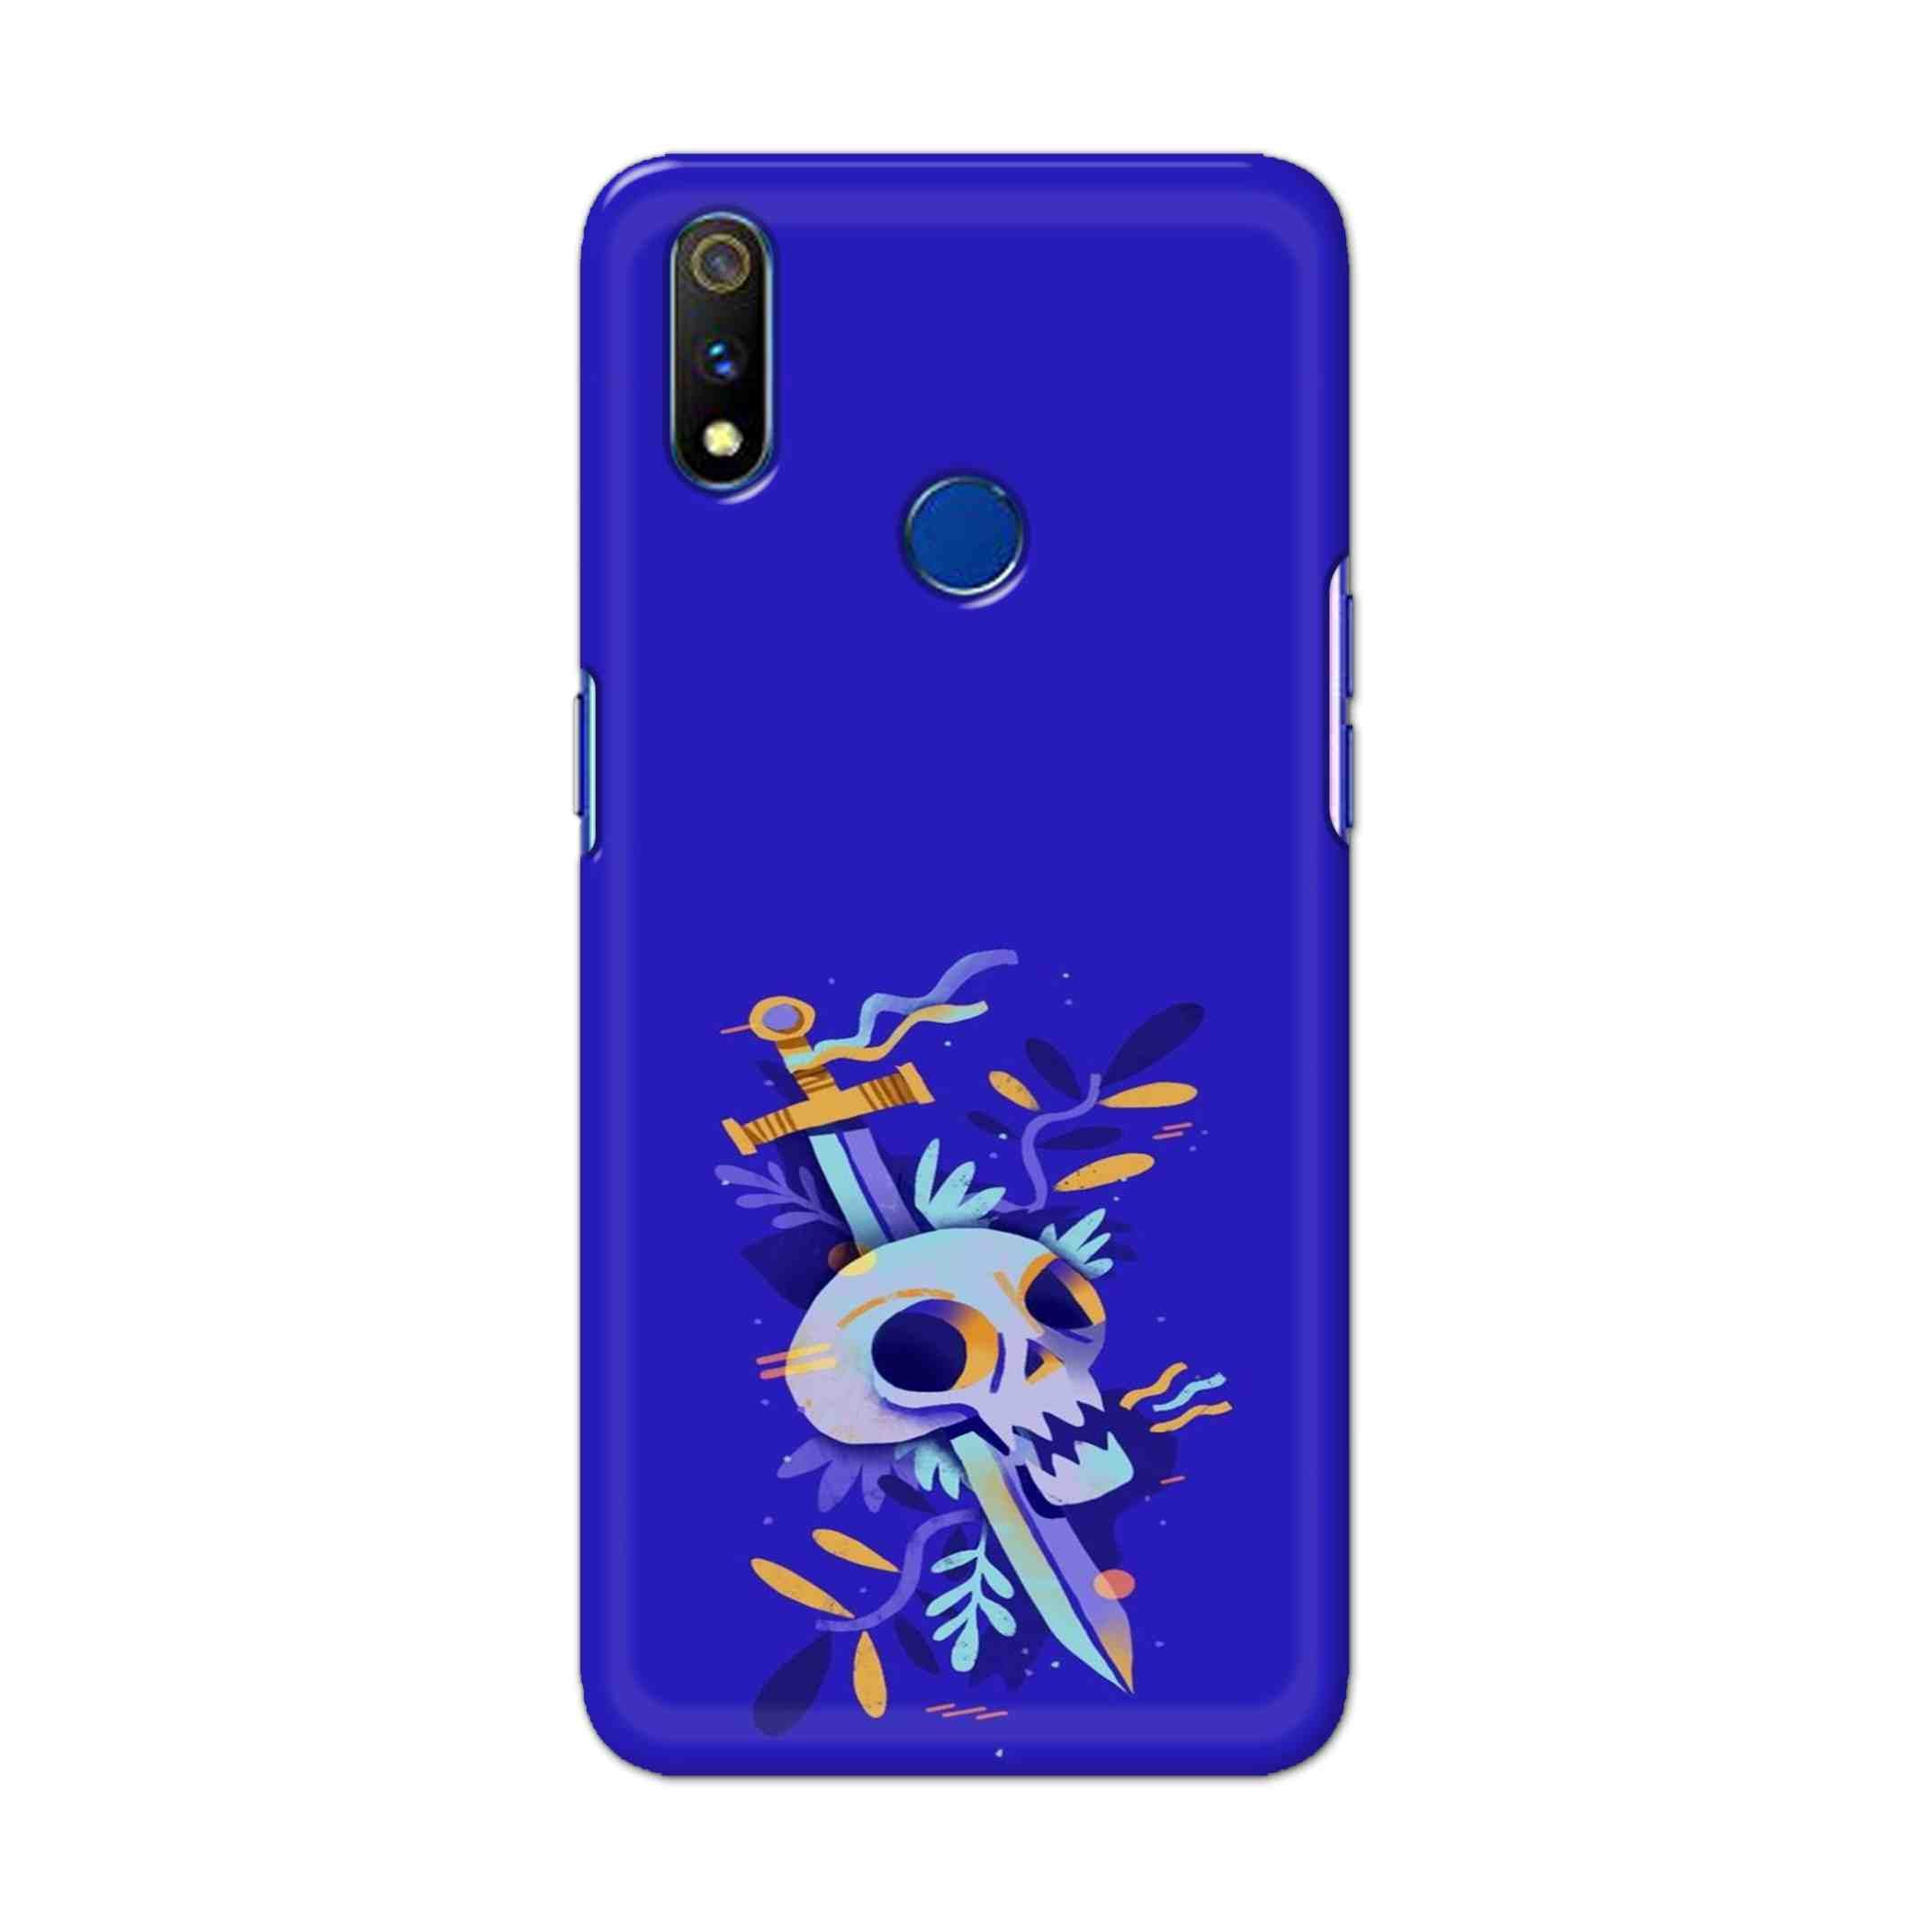 Buy Blue Skull Hard Back Mobile Phone Case Cover For Realme 3 Pro Online